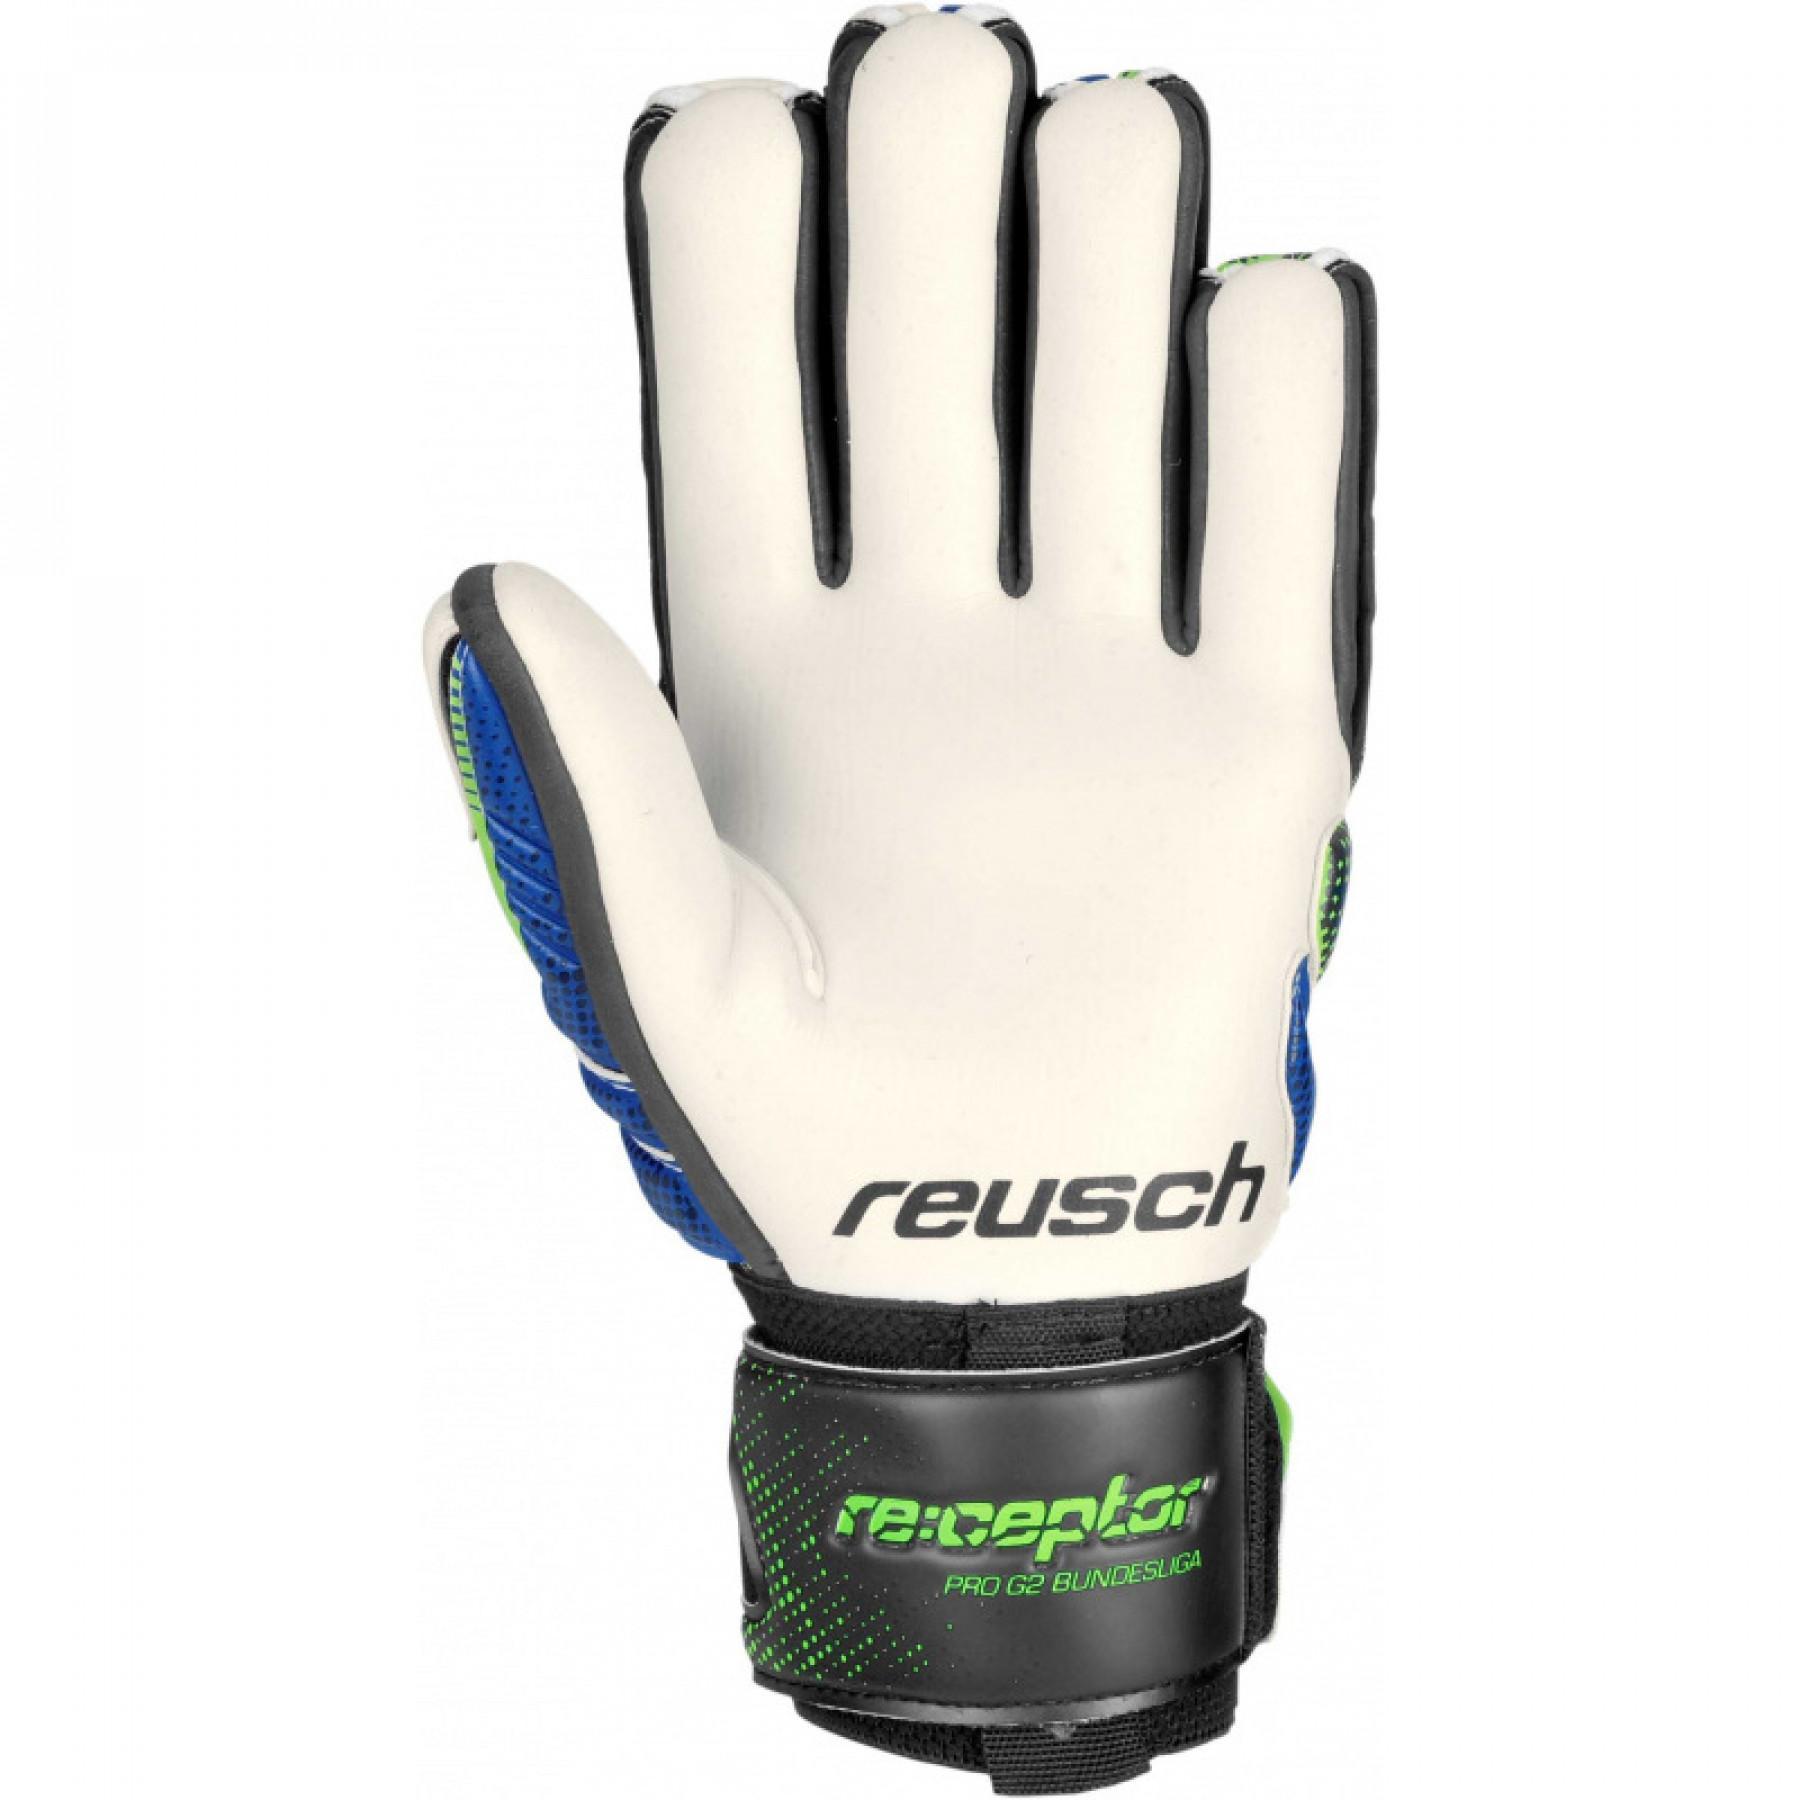 Handschuhe Reusch Re:ceptor Pro G2 Bundesliga